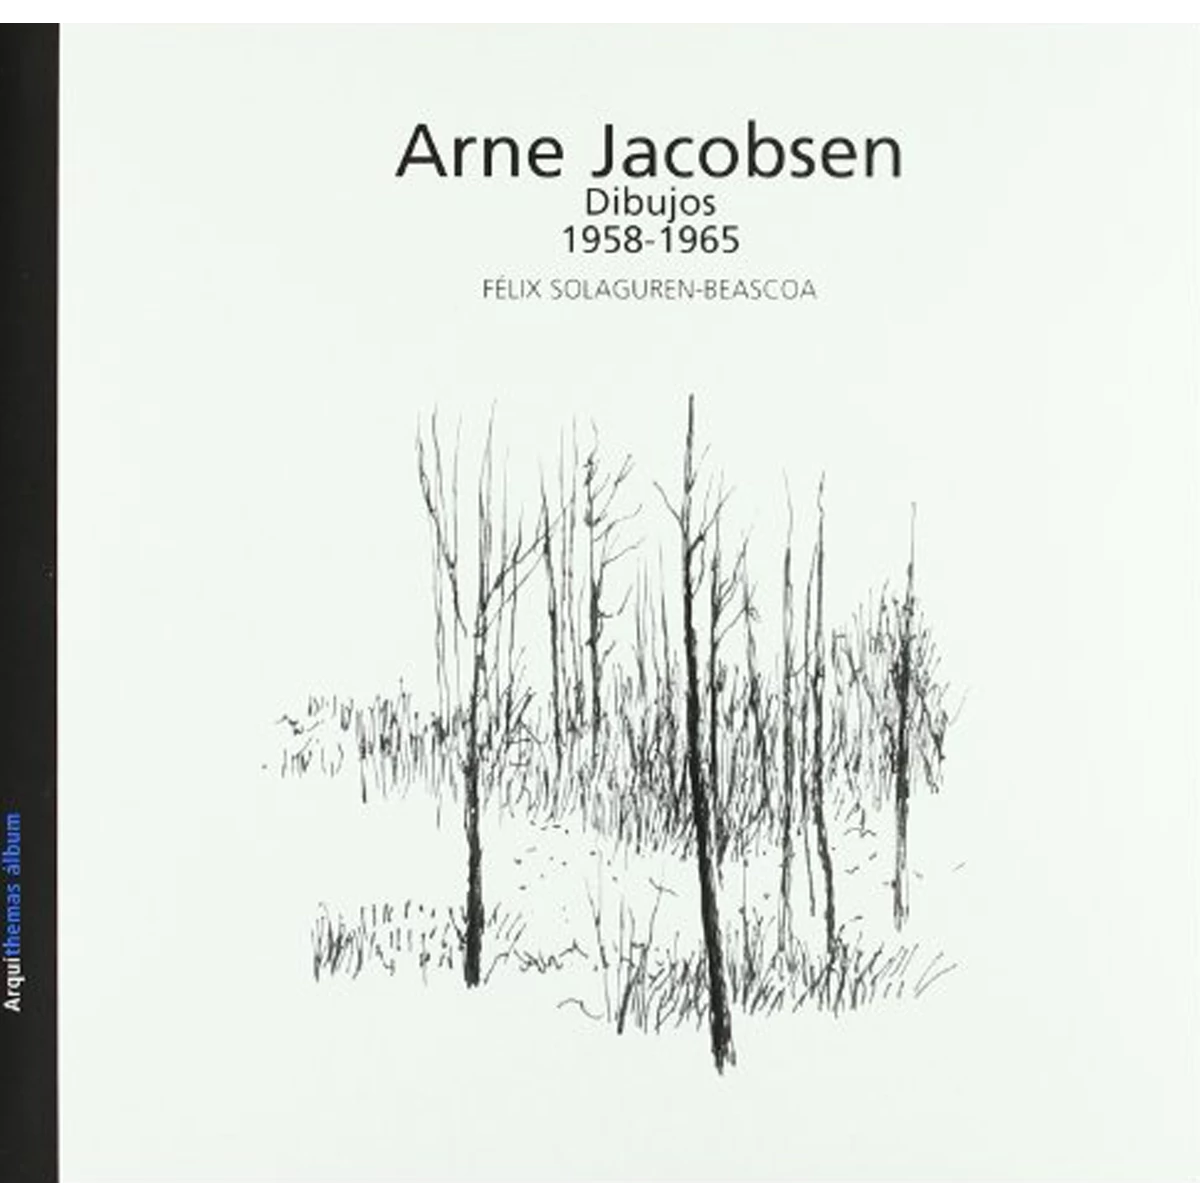 Arne Jacobsen: Dibujos 1958-1965